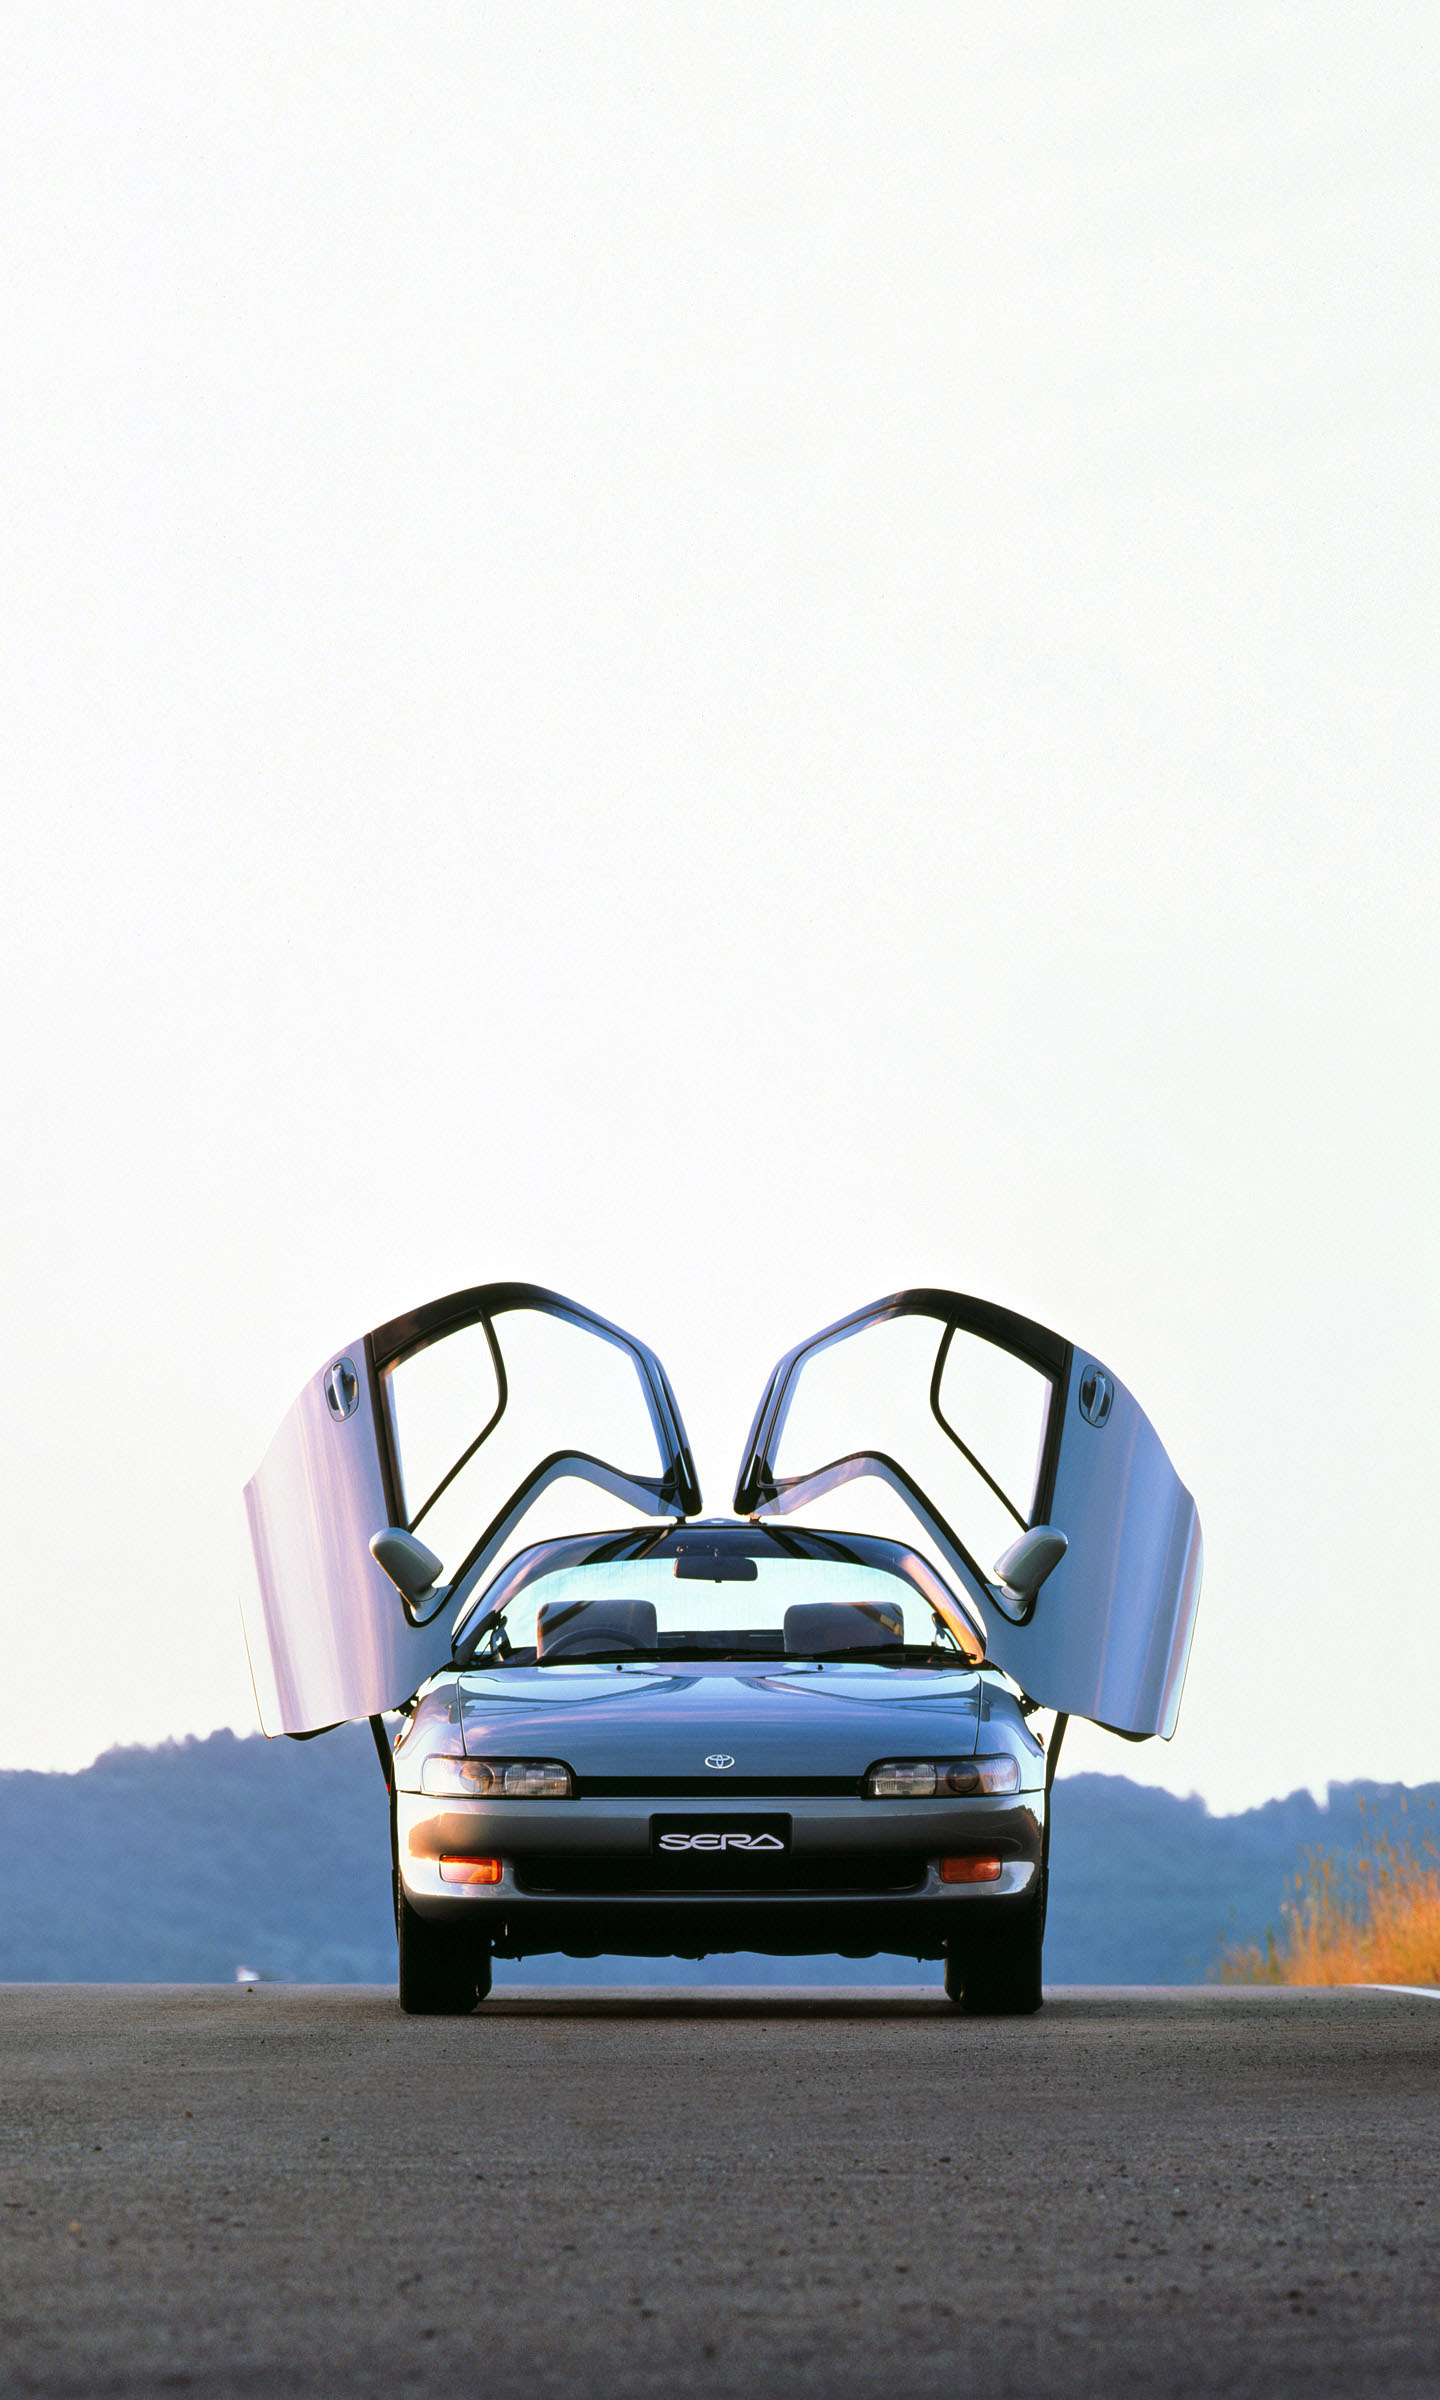  1990 Toyota Sera Wallpaper.